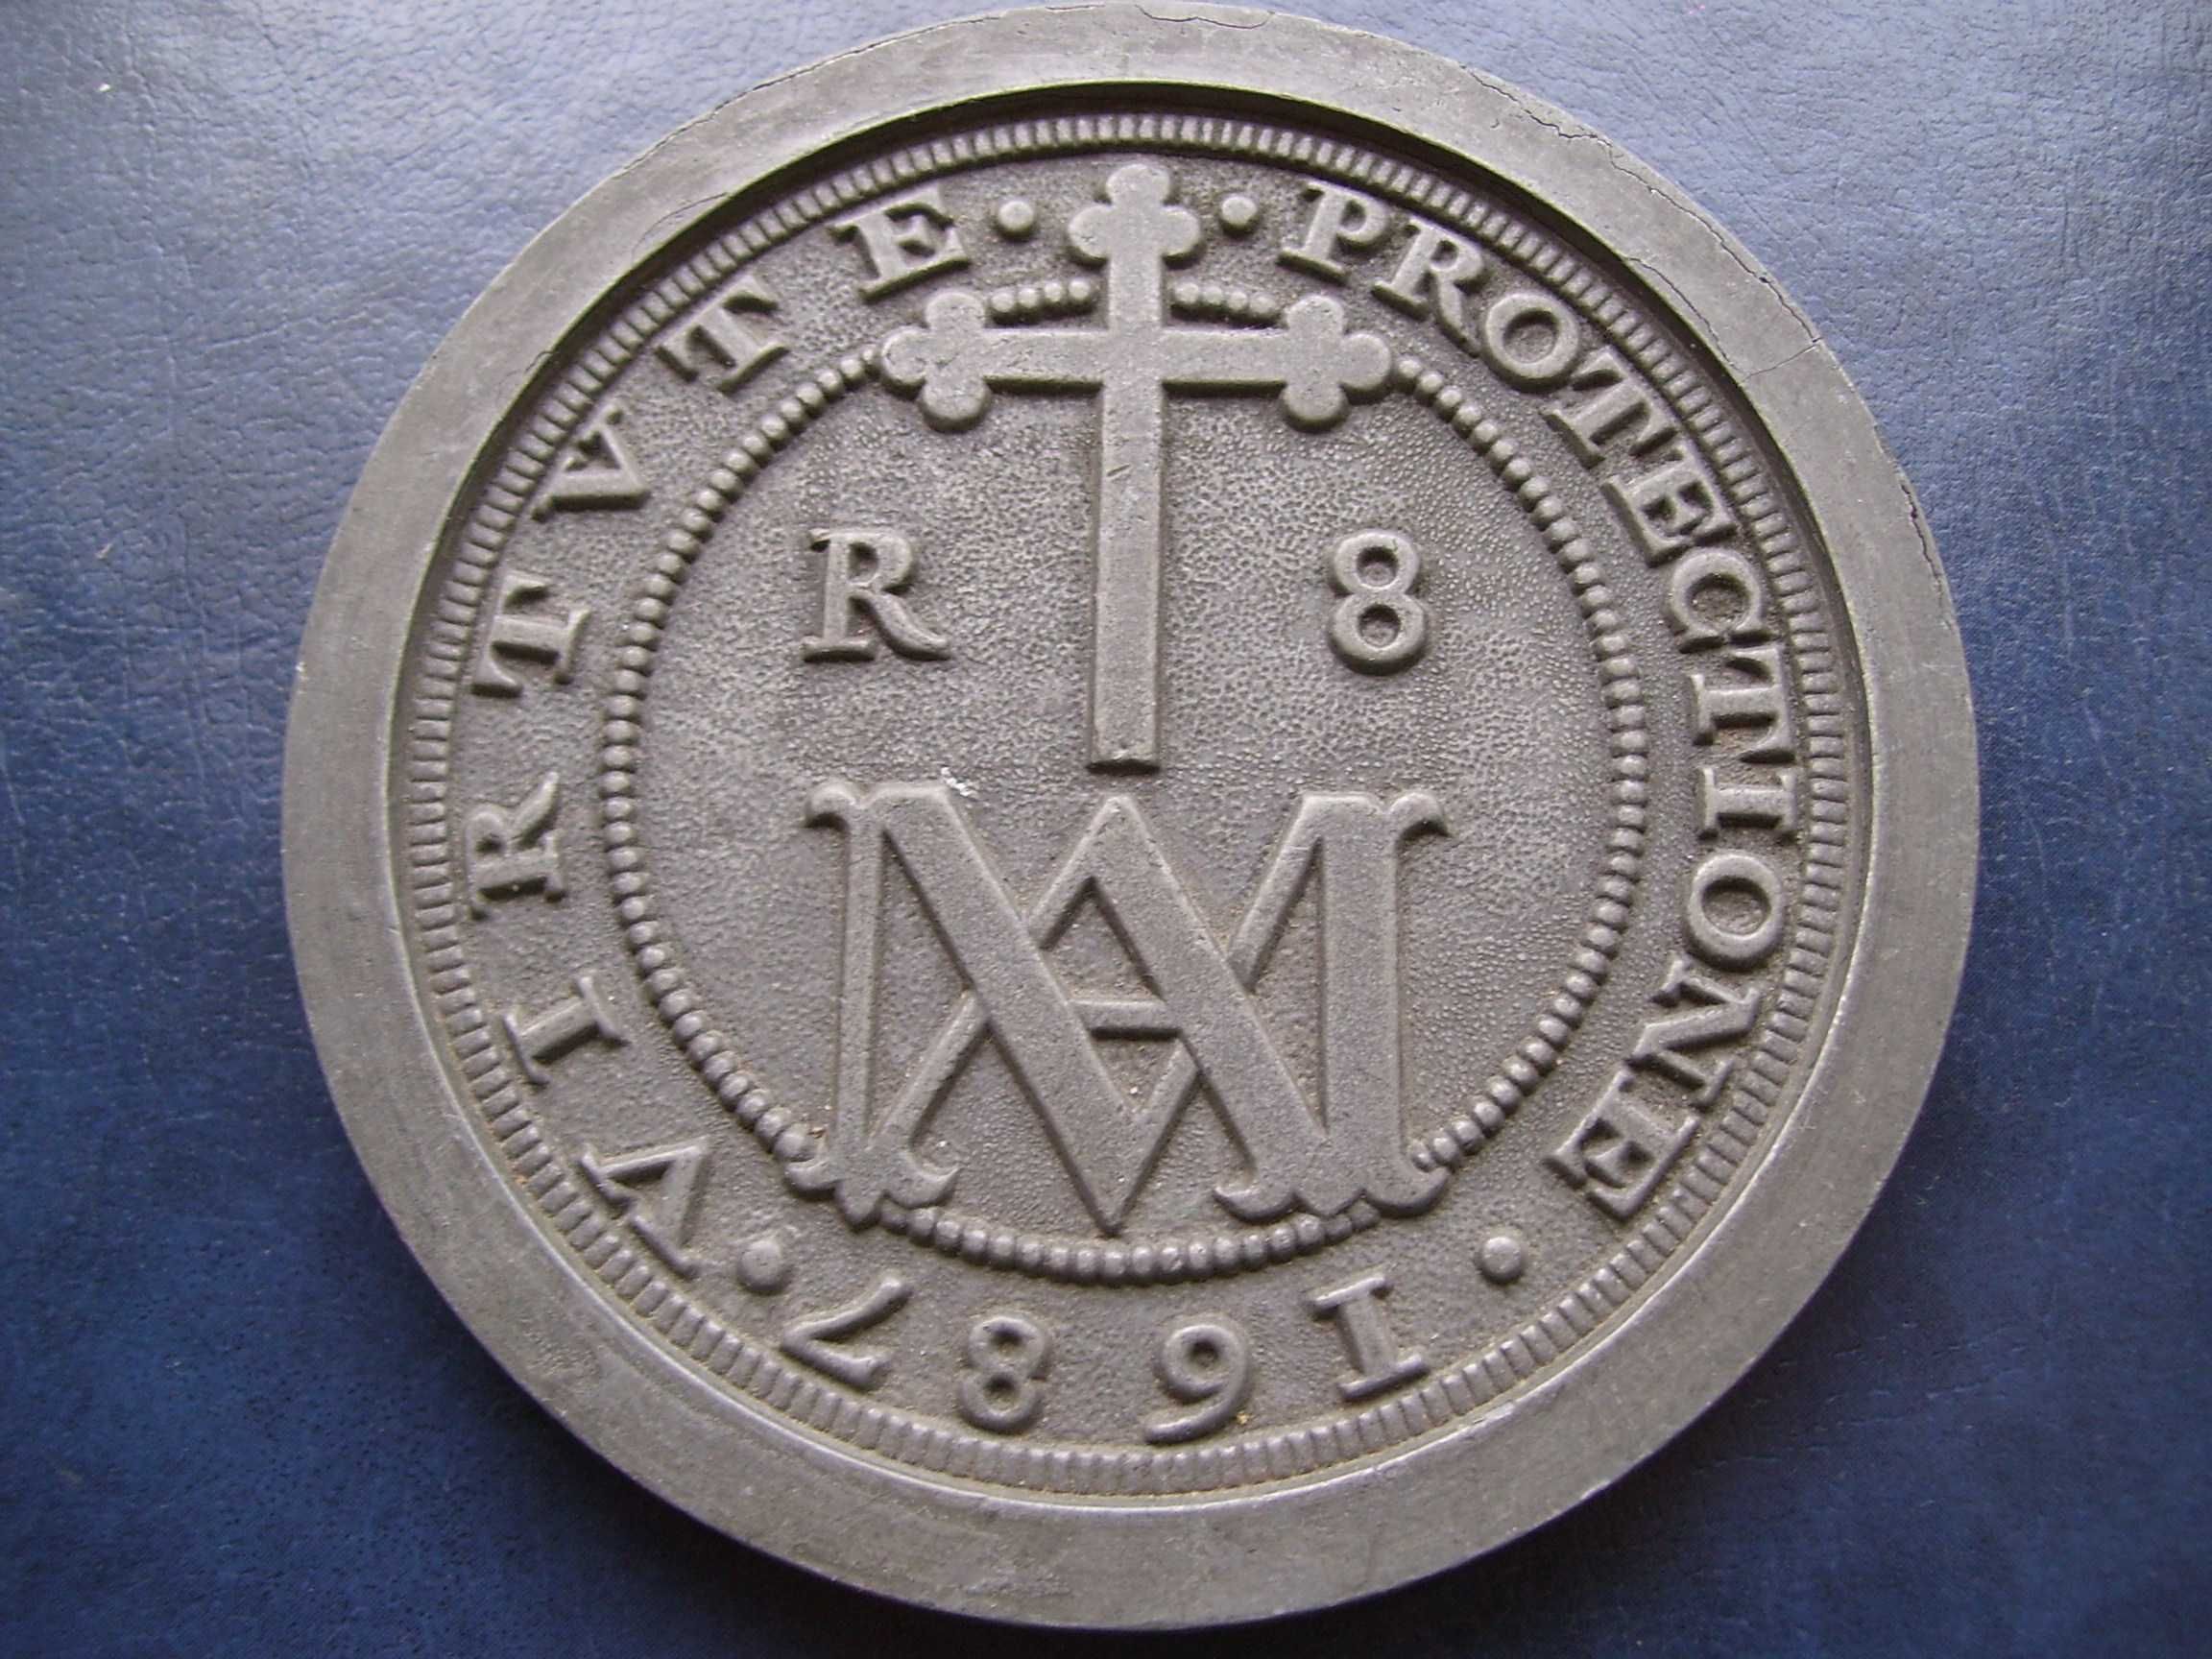 Stare monety Medal do identyfikacji Duży 84 mm